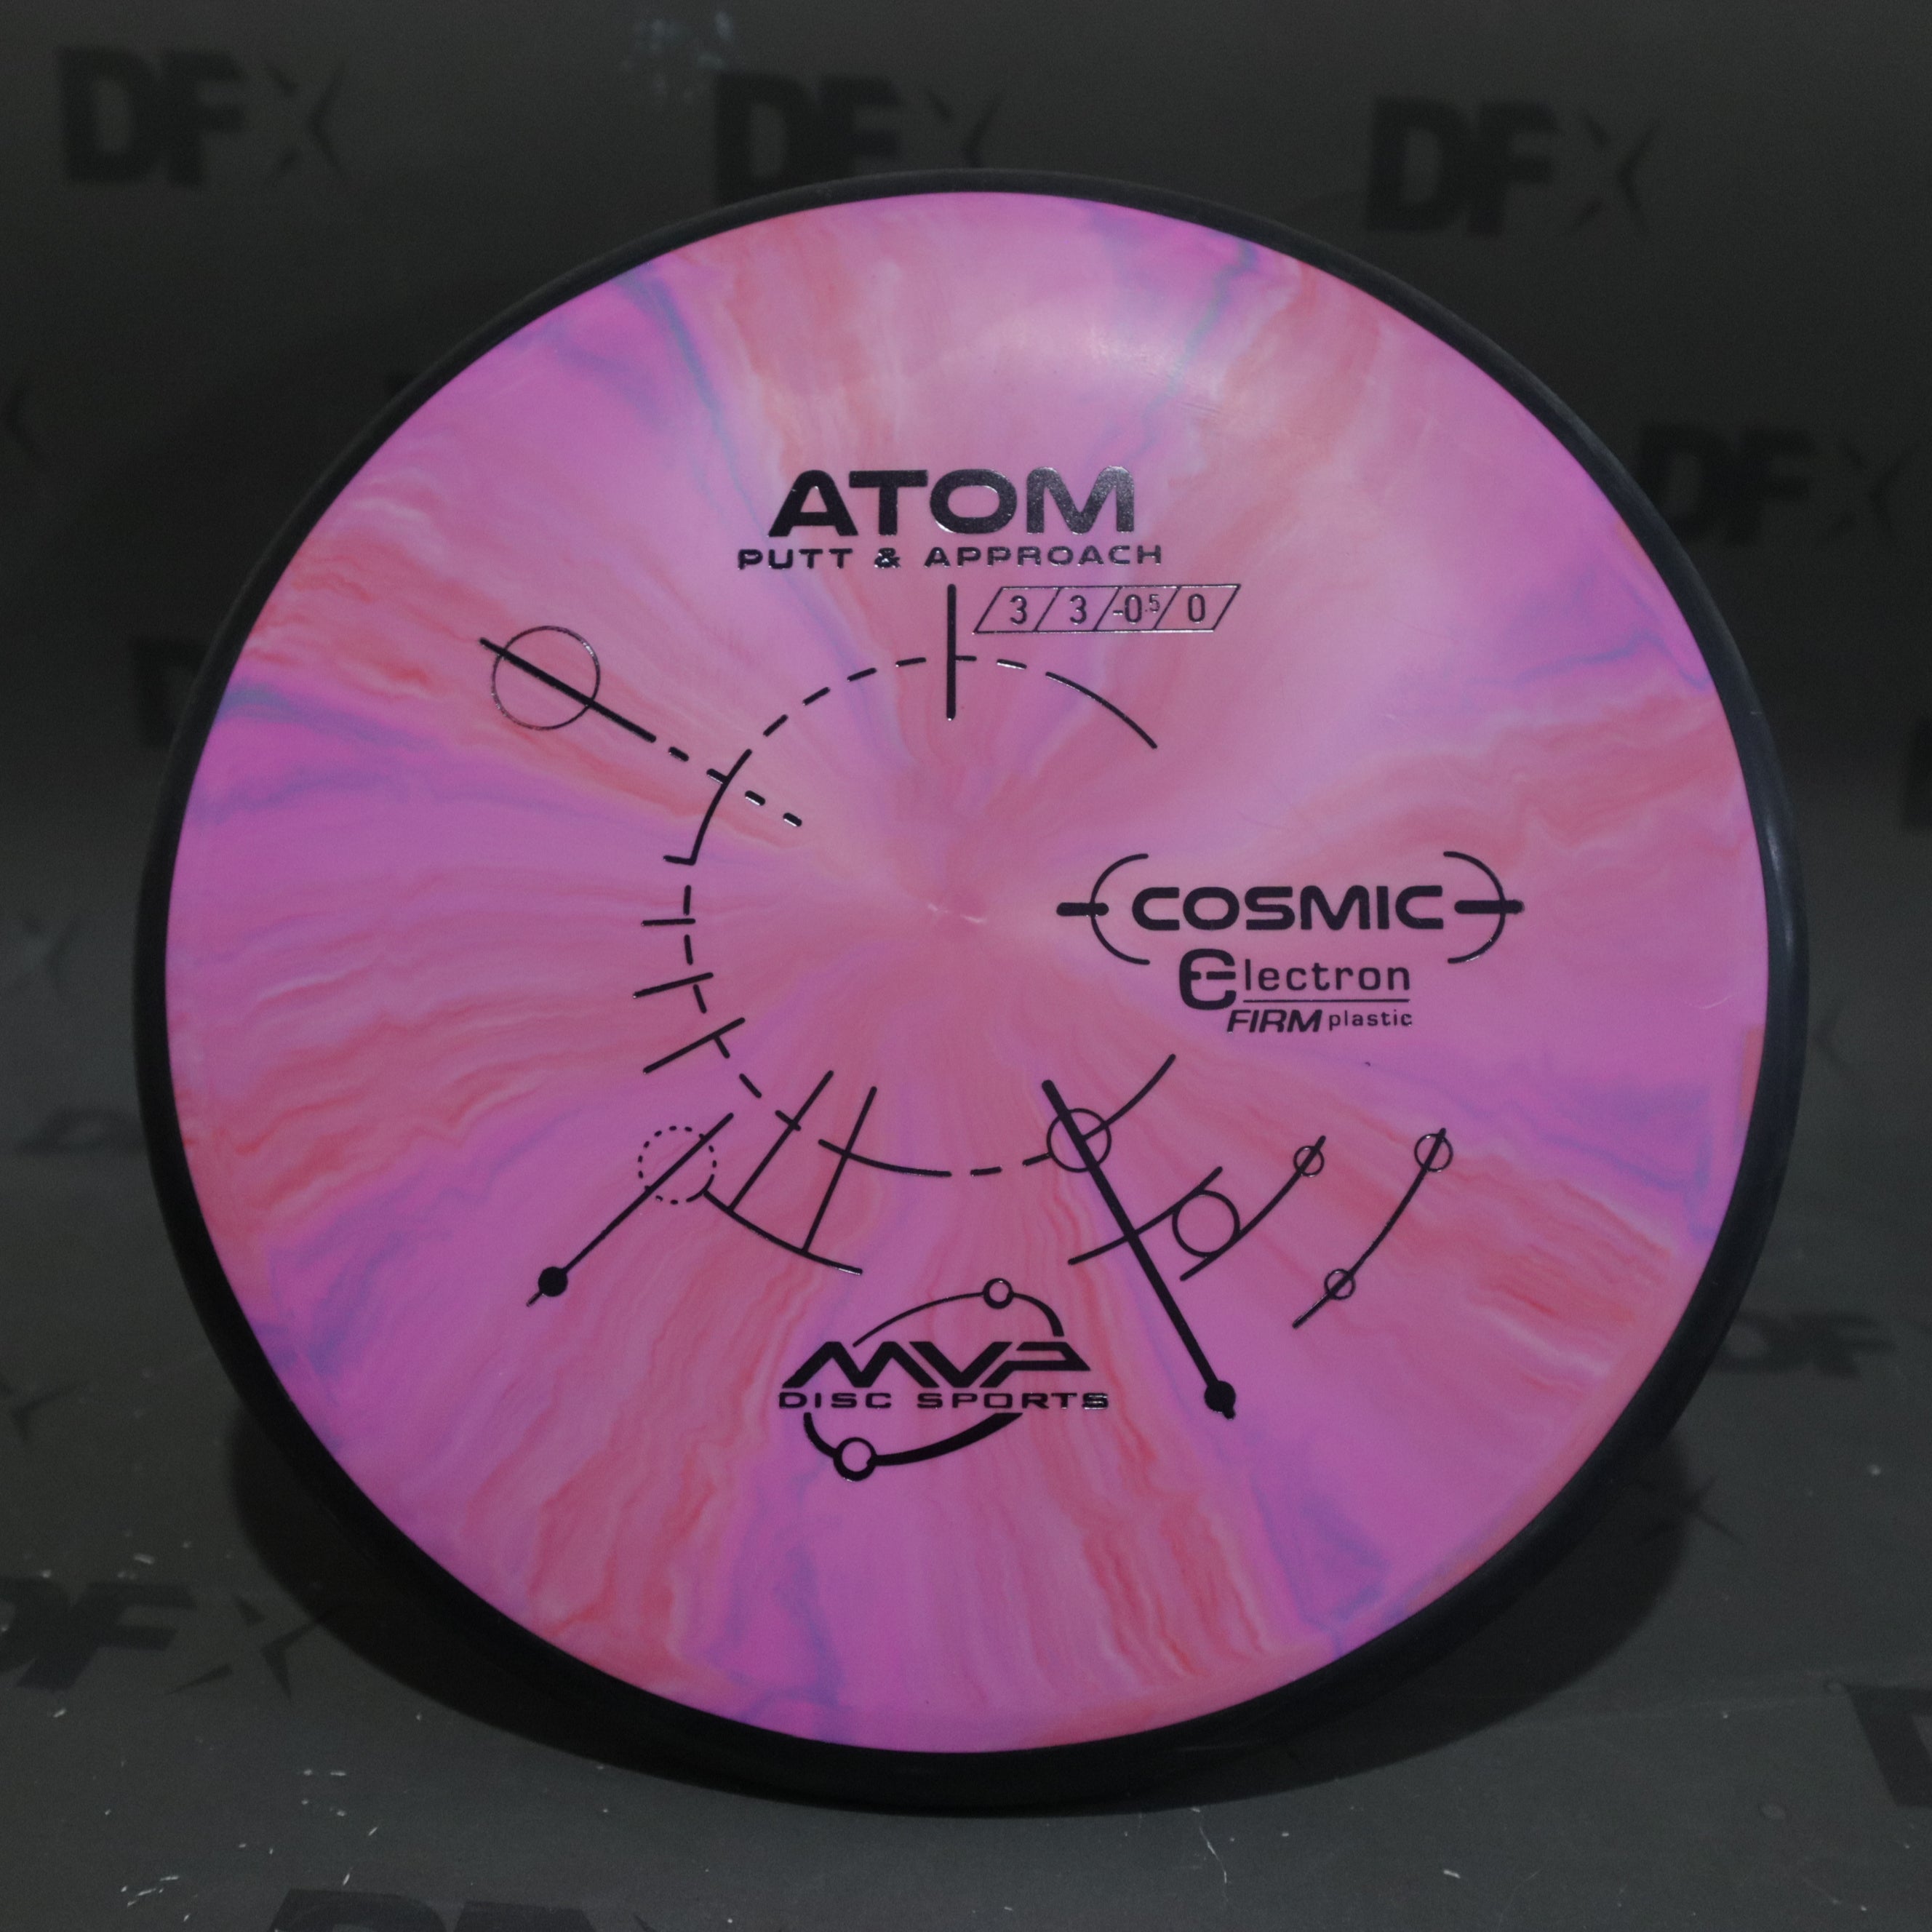 MVP Cosmic Electron FIRM Atom - Stock